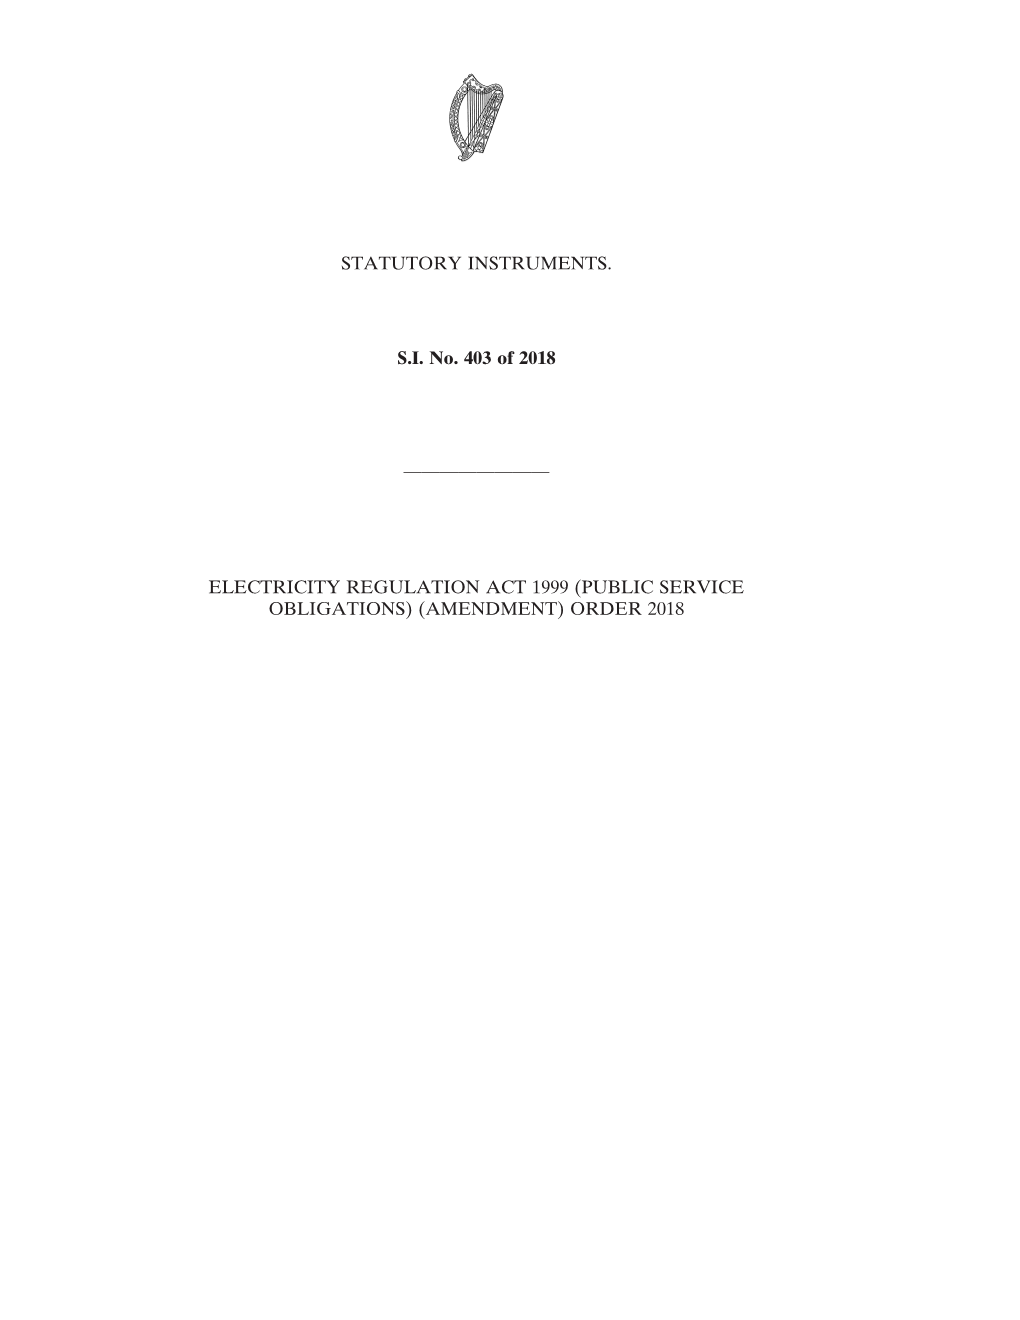 STATUTORY INSTRUMENTS. S.I. No. 403 of 2018 ———————— ELECTRICITY REGULATION ACT 1999 (PUBLIC SERVICE OBLIGATIONS